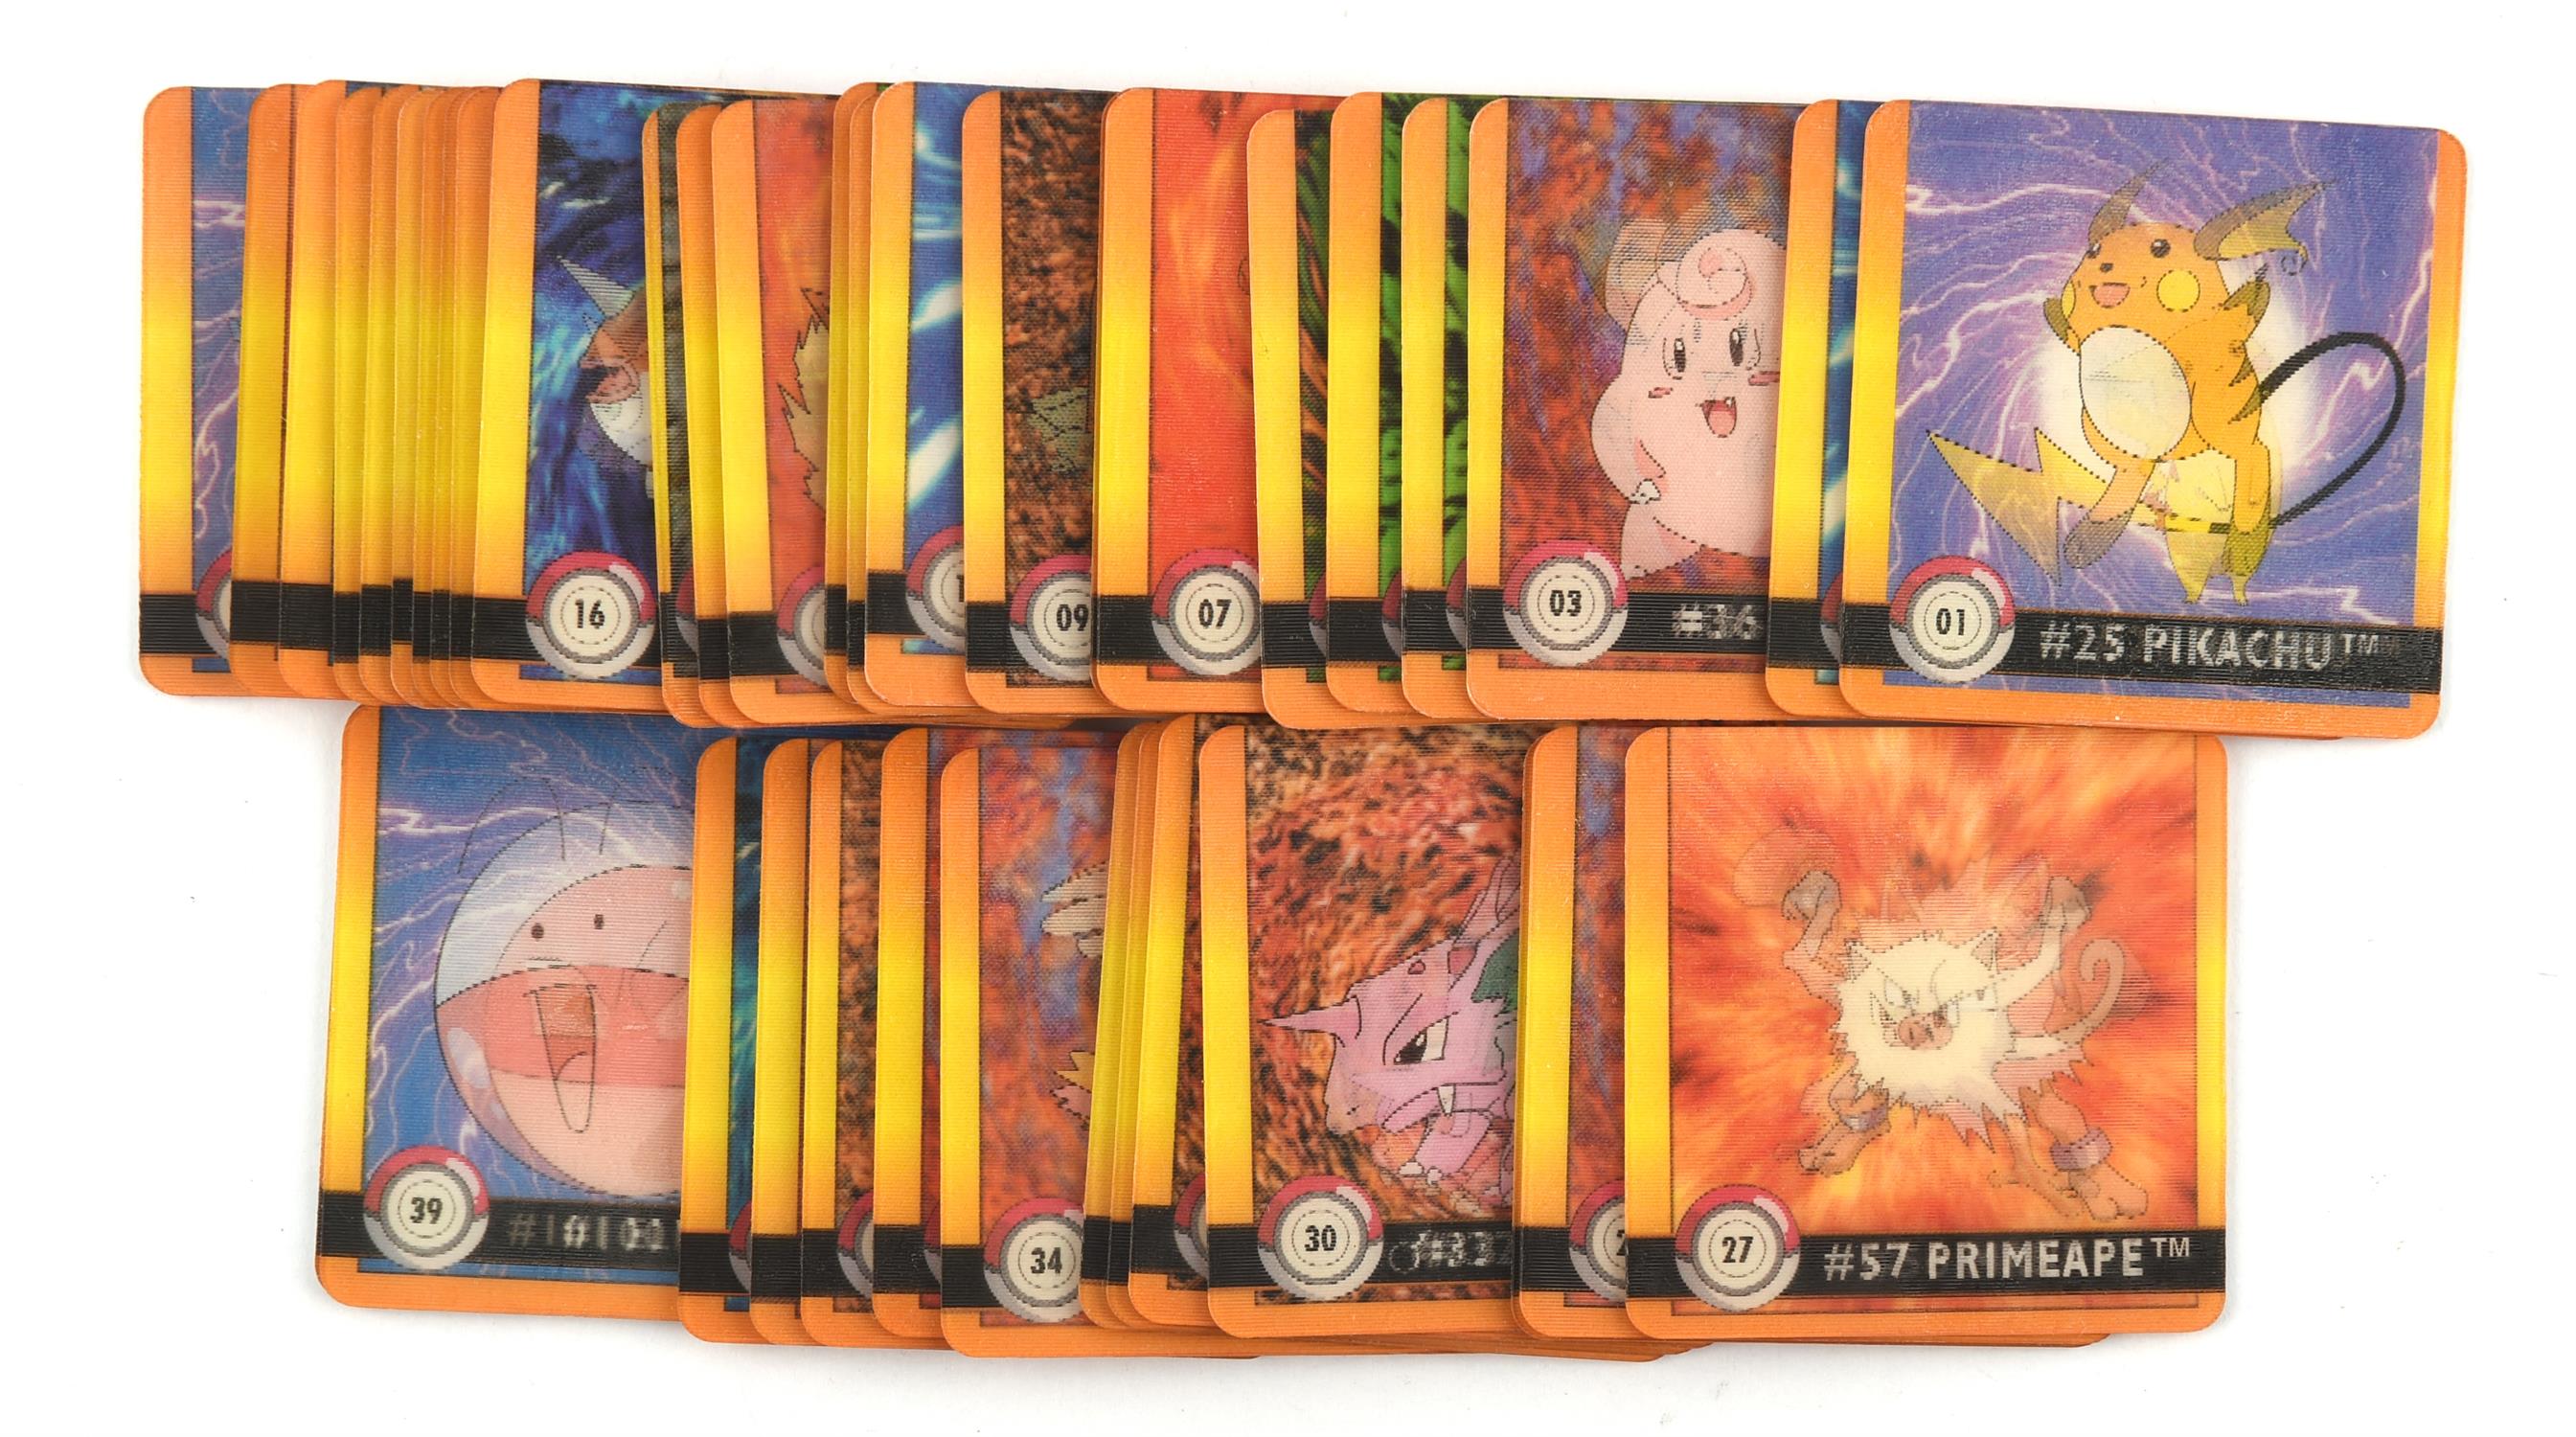 Pokemon TCG. Pokemon Action Flipz Premier Edition complete set of 1-40 lenticular cards.